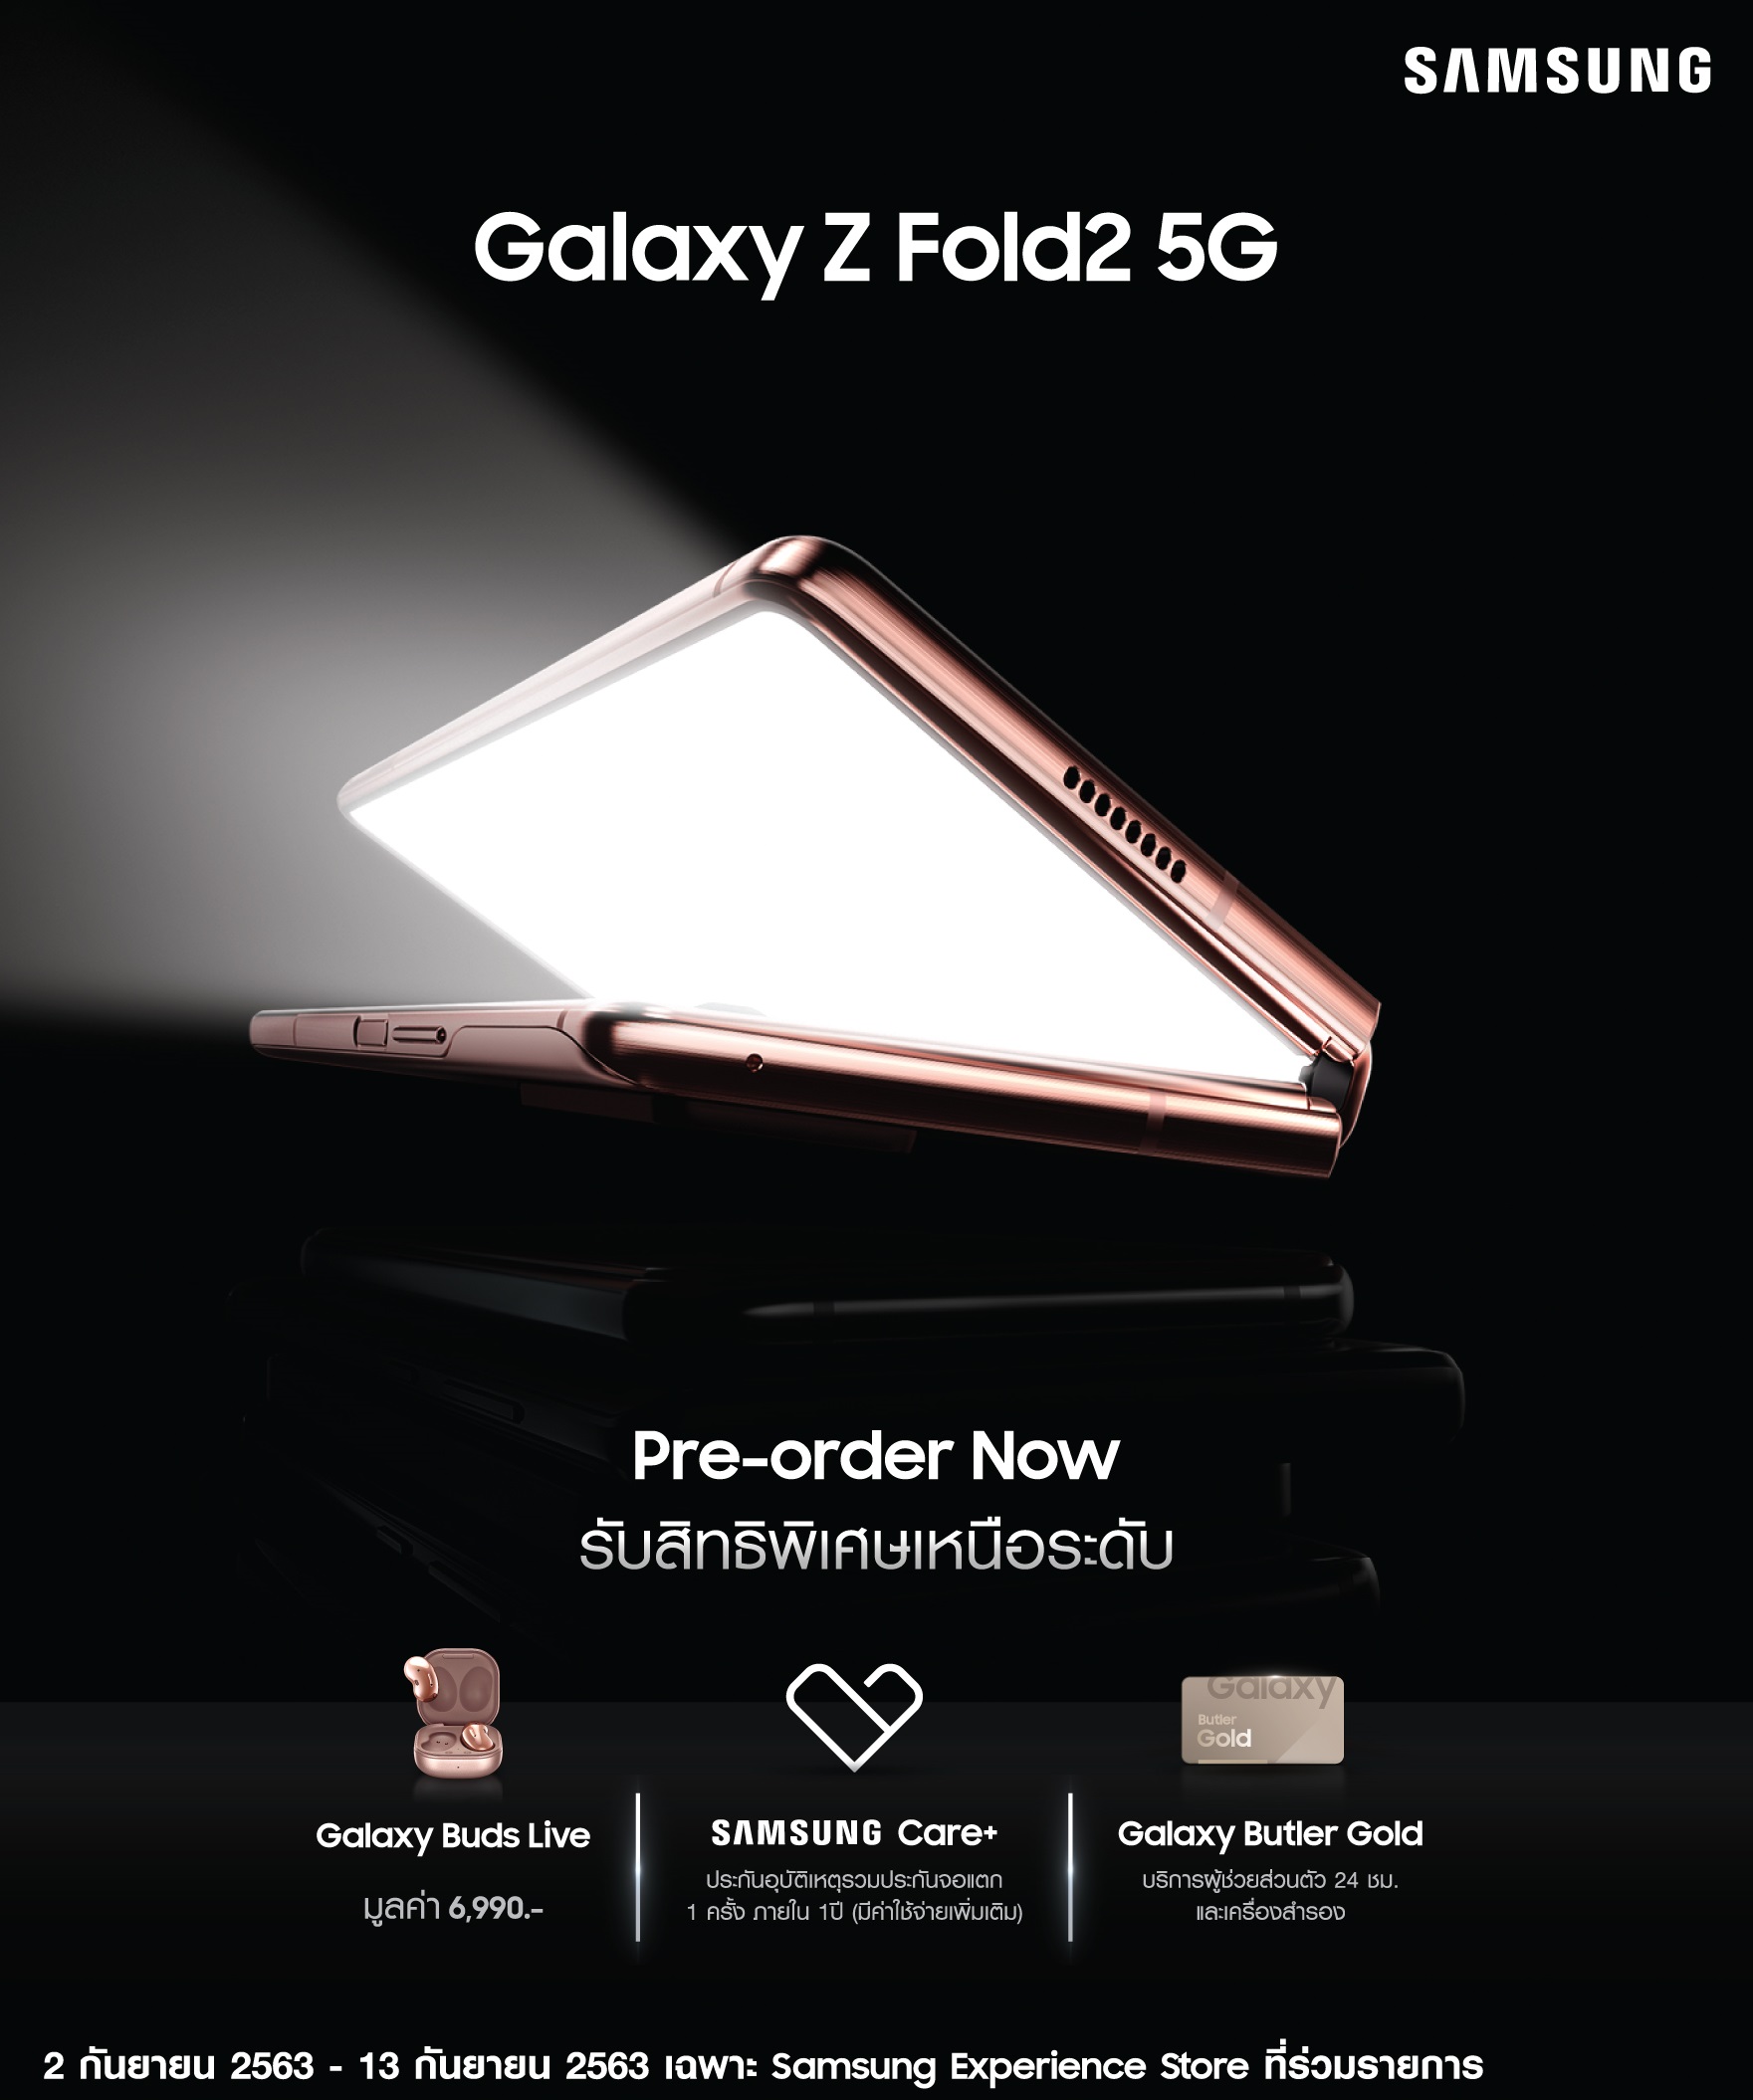 Galaxy Z Fold2 5G Pre order 1 | galaxy z fold 2 | Samsung ไทยเปิดจอง ‘Galaxy Z Fold 2 5G’ กลุ่มแรกของโลก สุดยอดนวัตกรรมสมาร์ทโฟนแห่งยุค